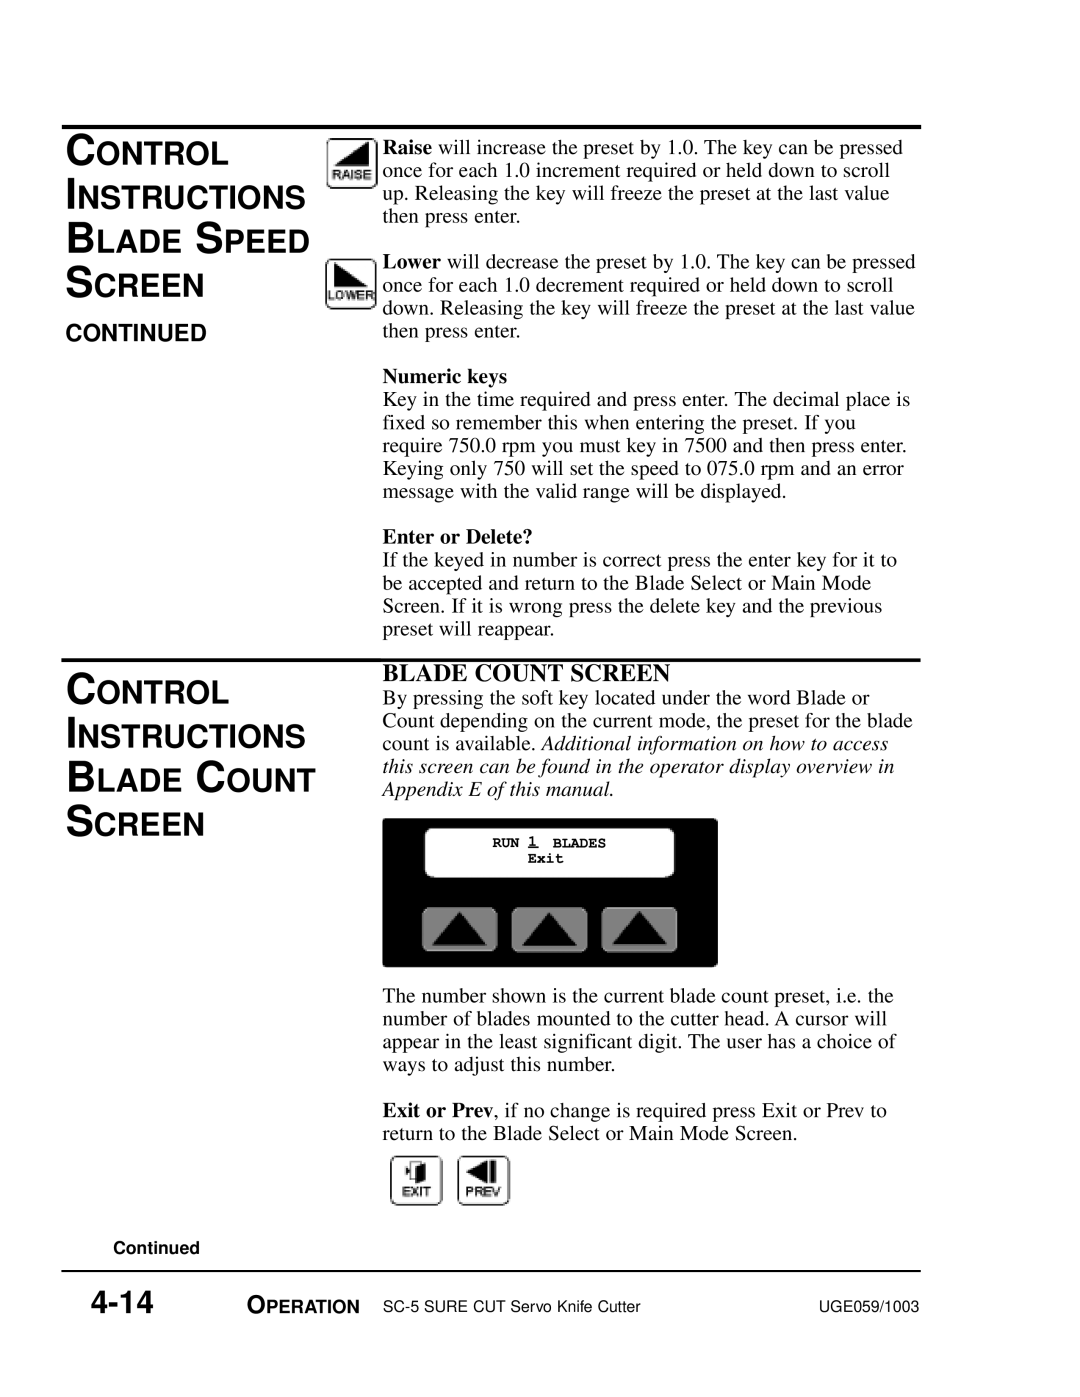 Conair SC-5 manual Control Instructions Blade Count Screen, 4-14, Control Instructions Blade Speed Screen, Continued 